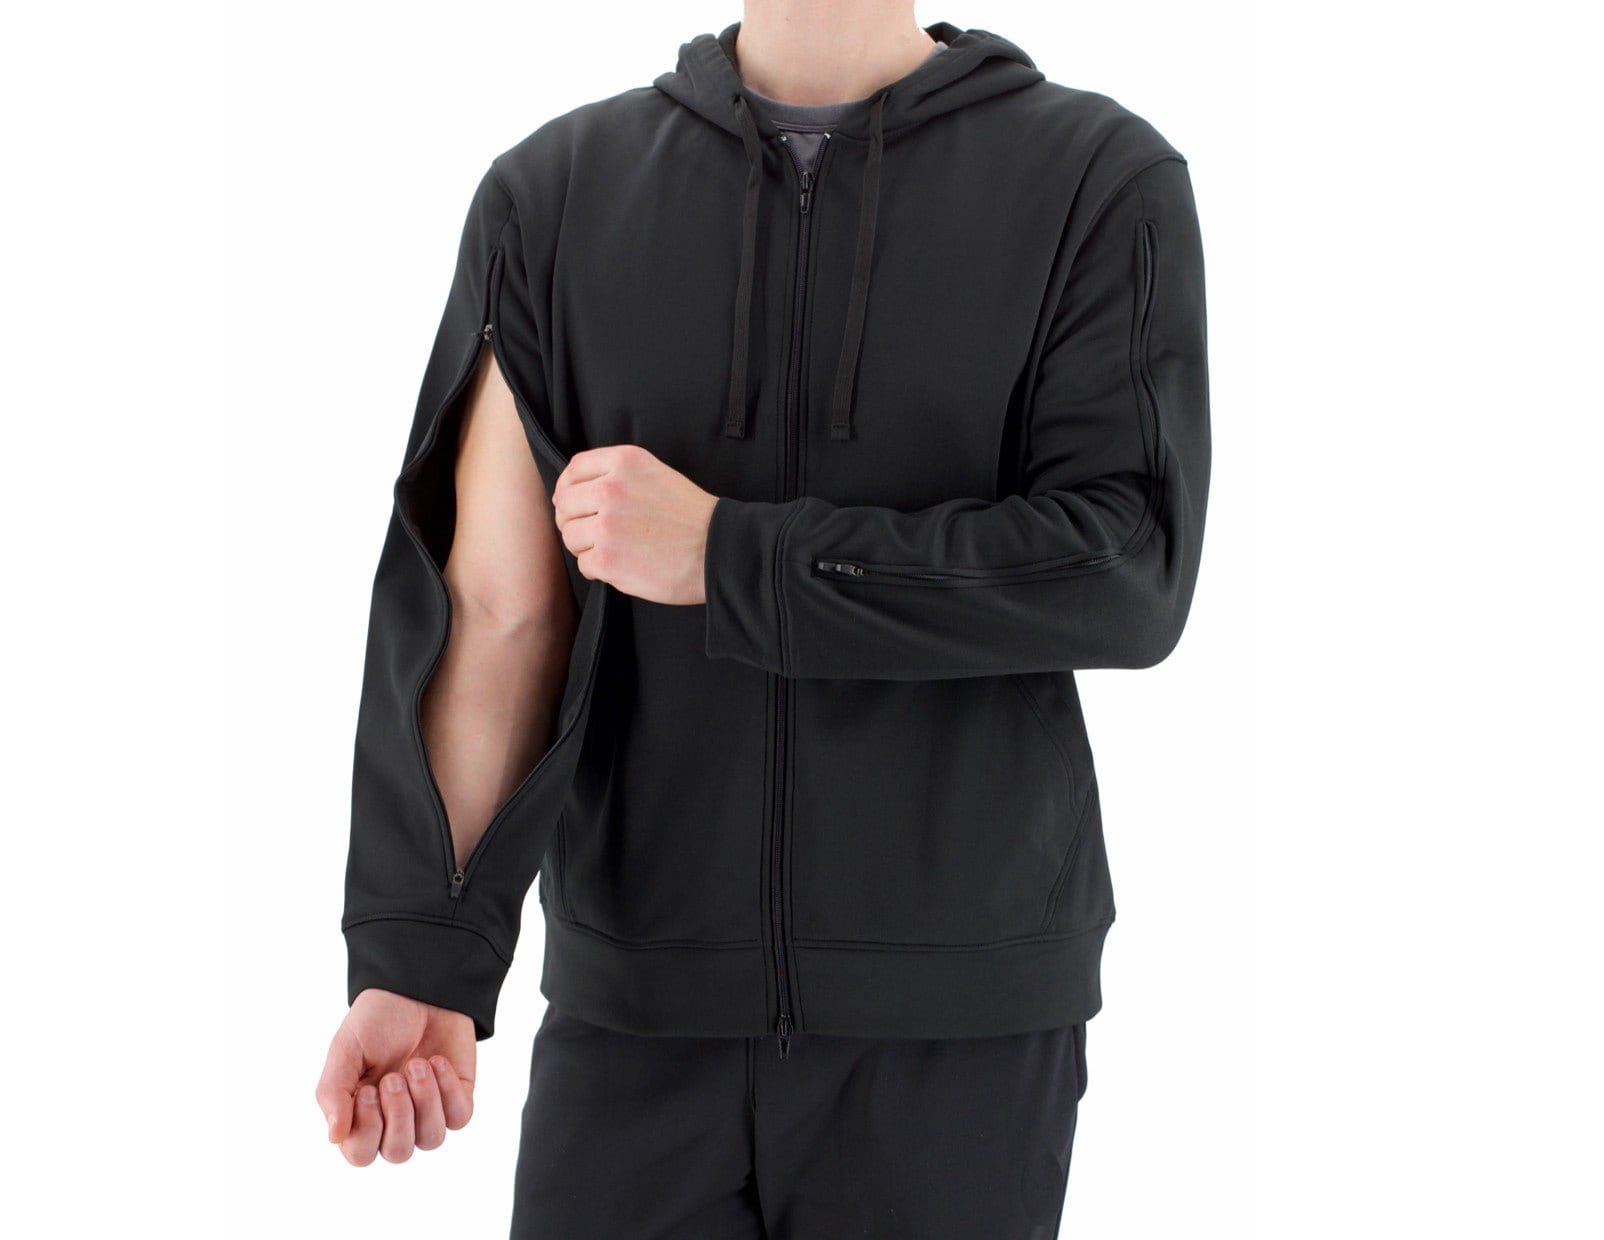 Dialysis Sweatshirt with Sleeve Zippers - Men's - Women's - Unisex Sizing Renova Medical Wear